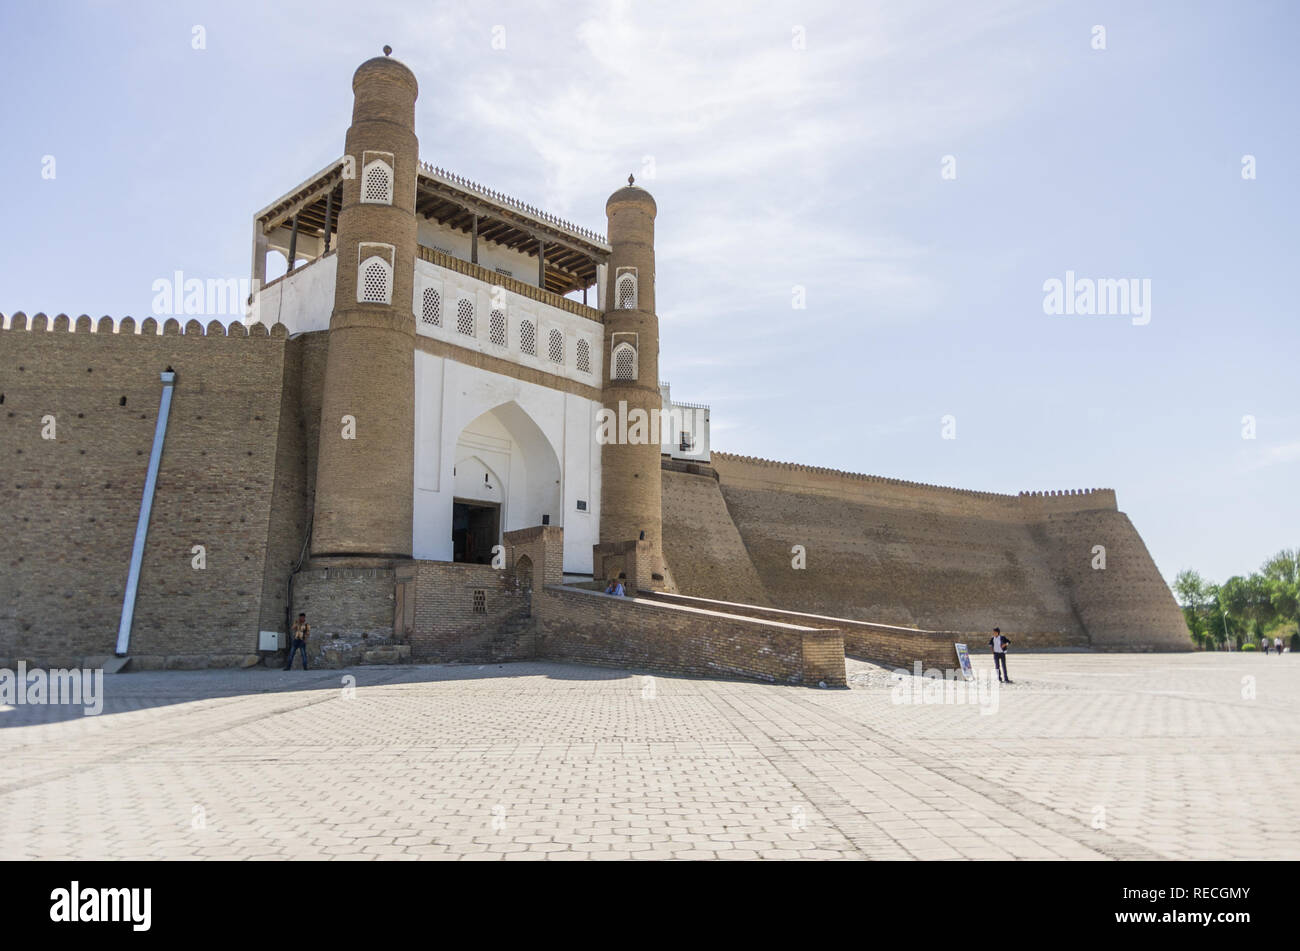 Bukhara, Uzbekistan - April 28, 2015: Gate of Bukhara Fortress ...